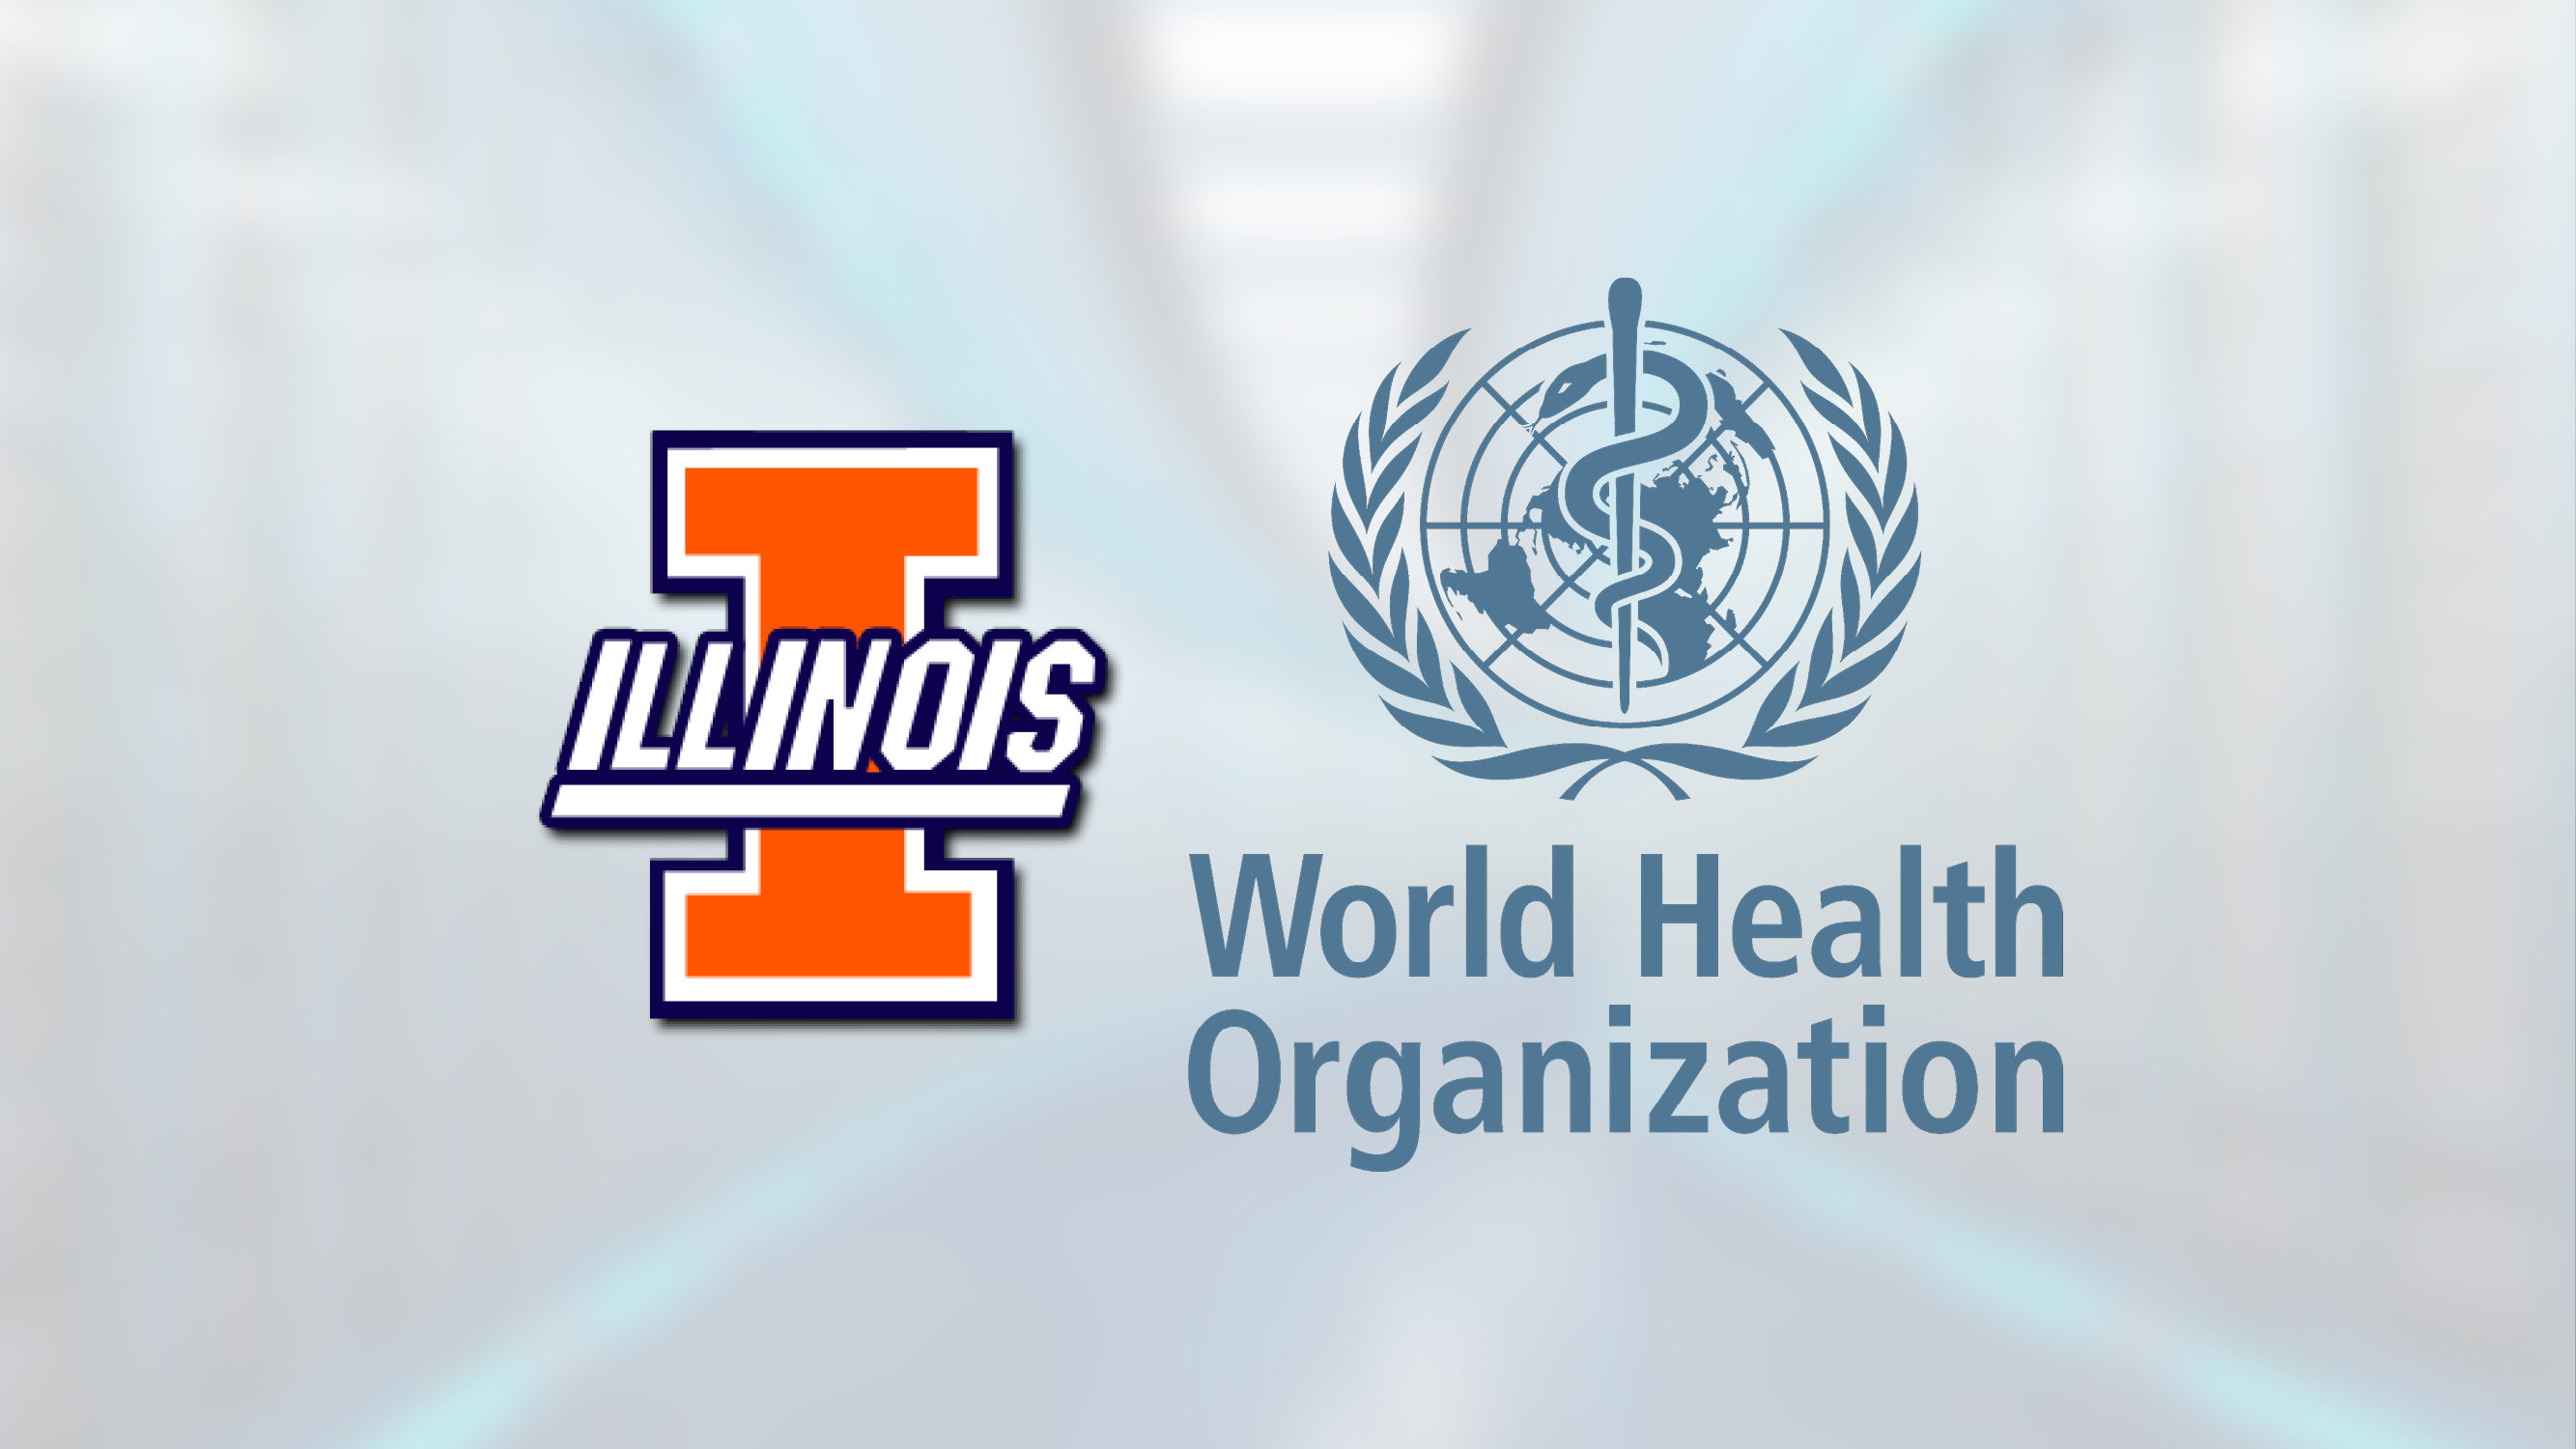 Illinois and World Health Organization